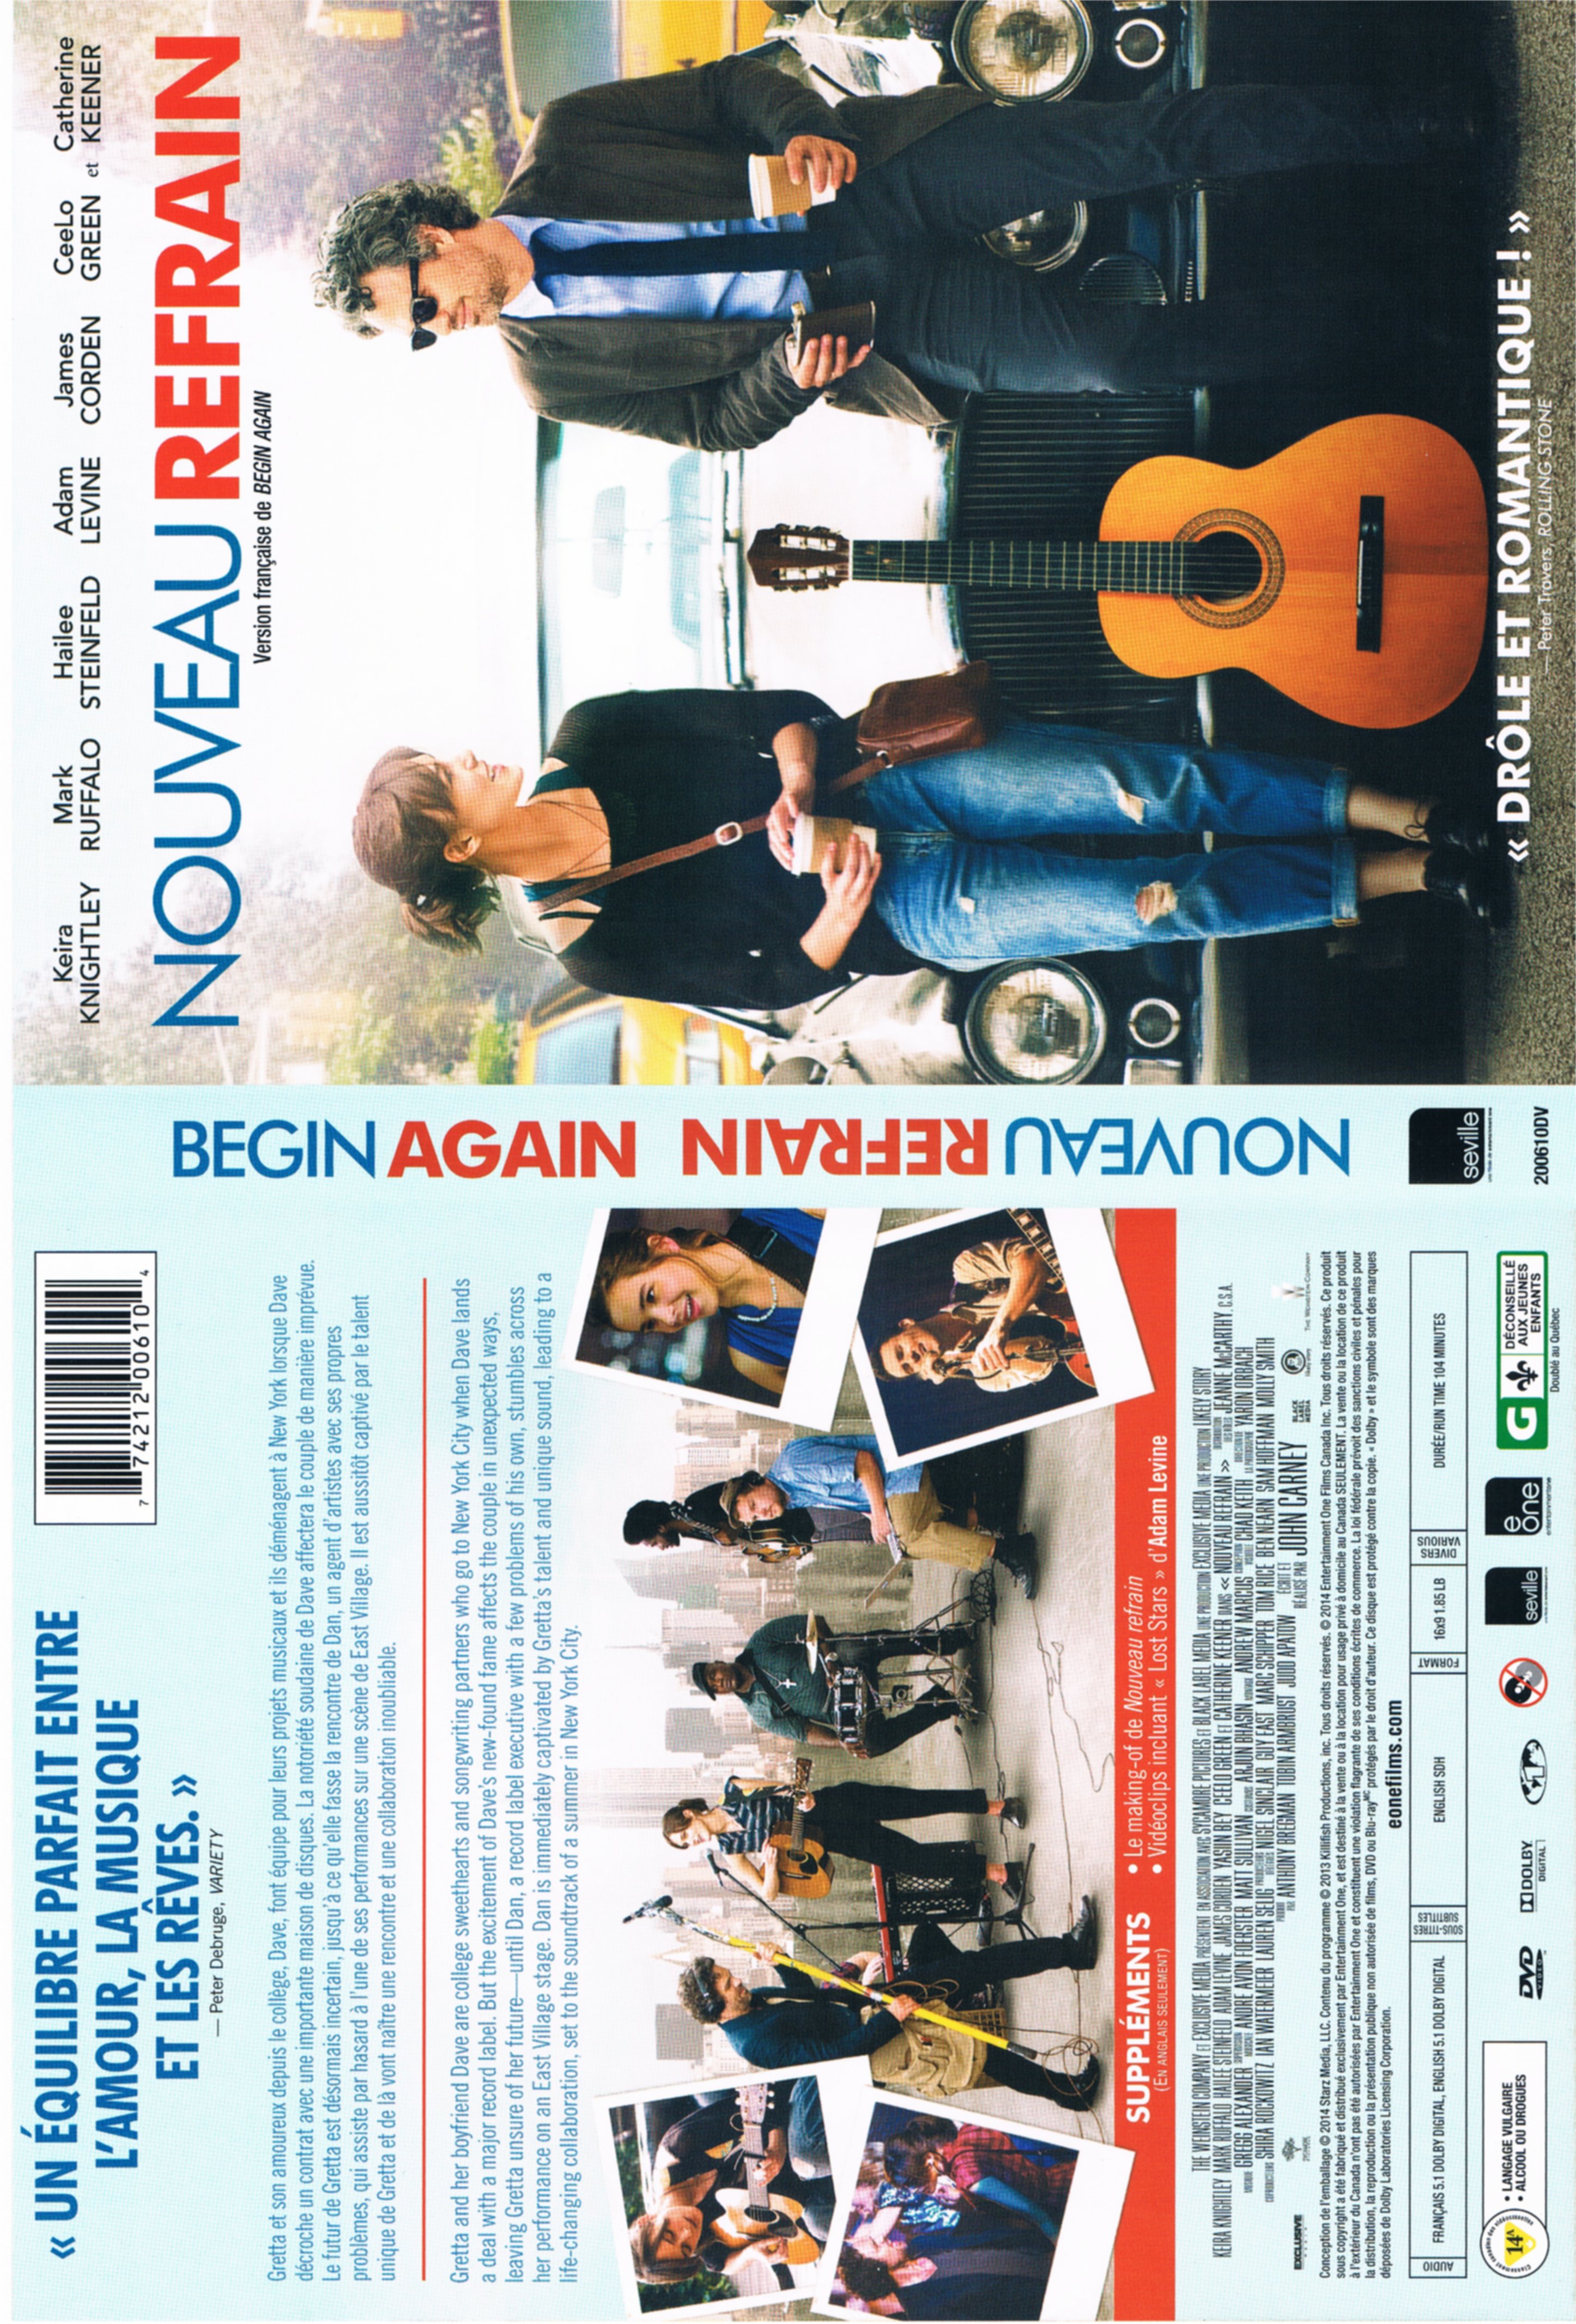 Jaquette DVD Begin again - Nouveau refrain (Canadienne)